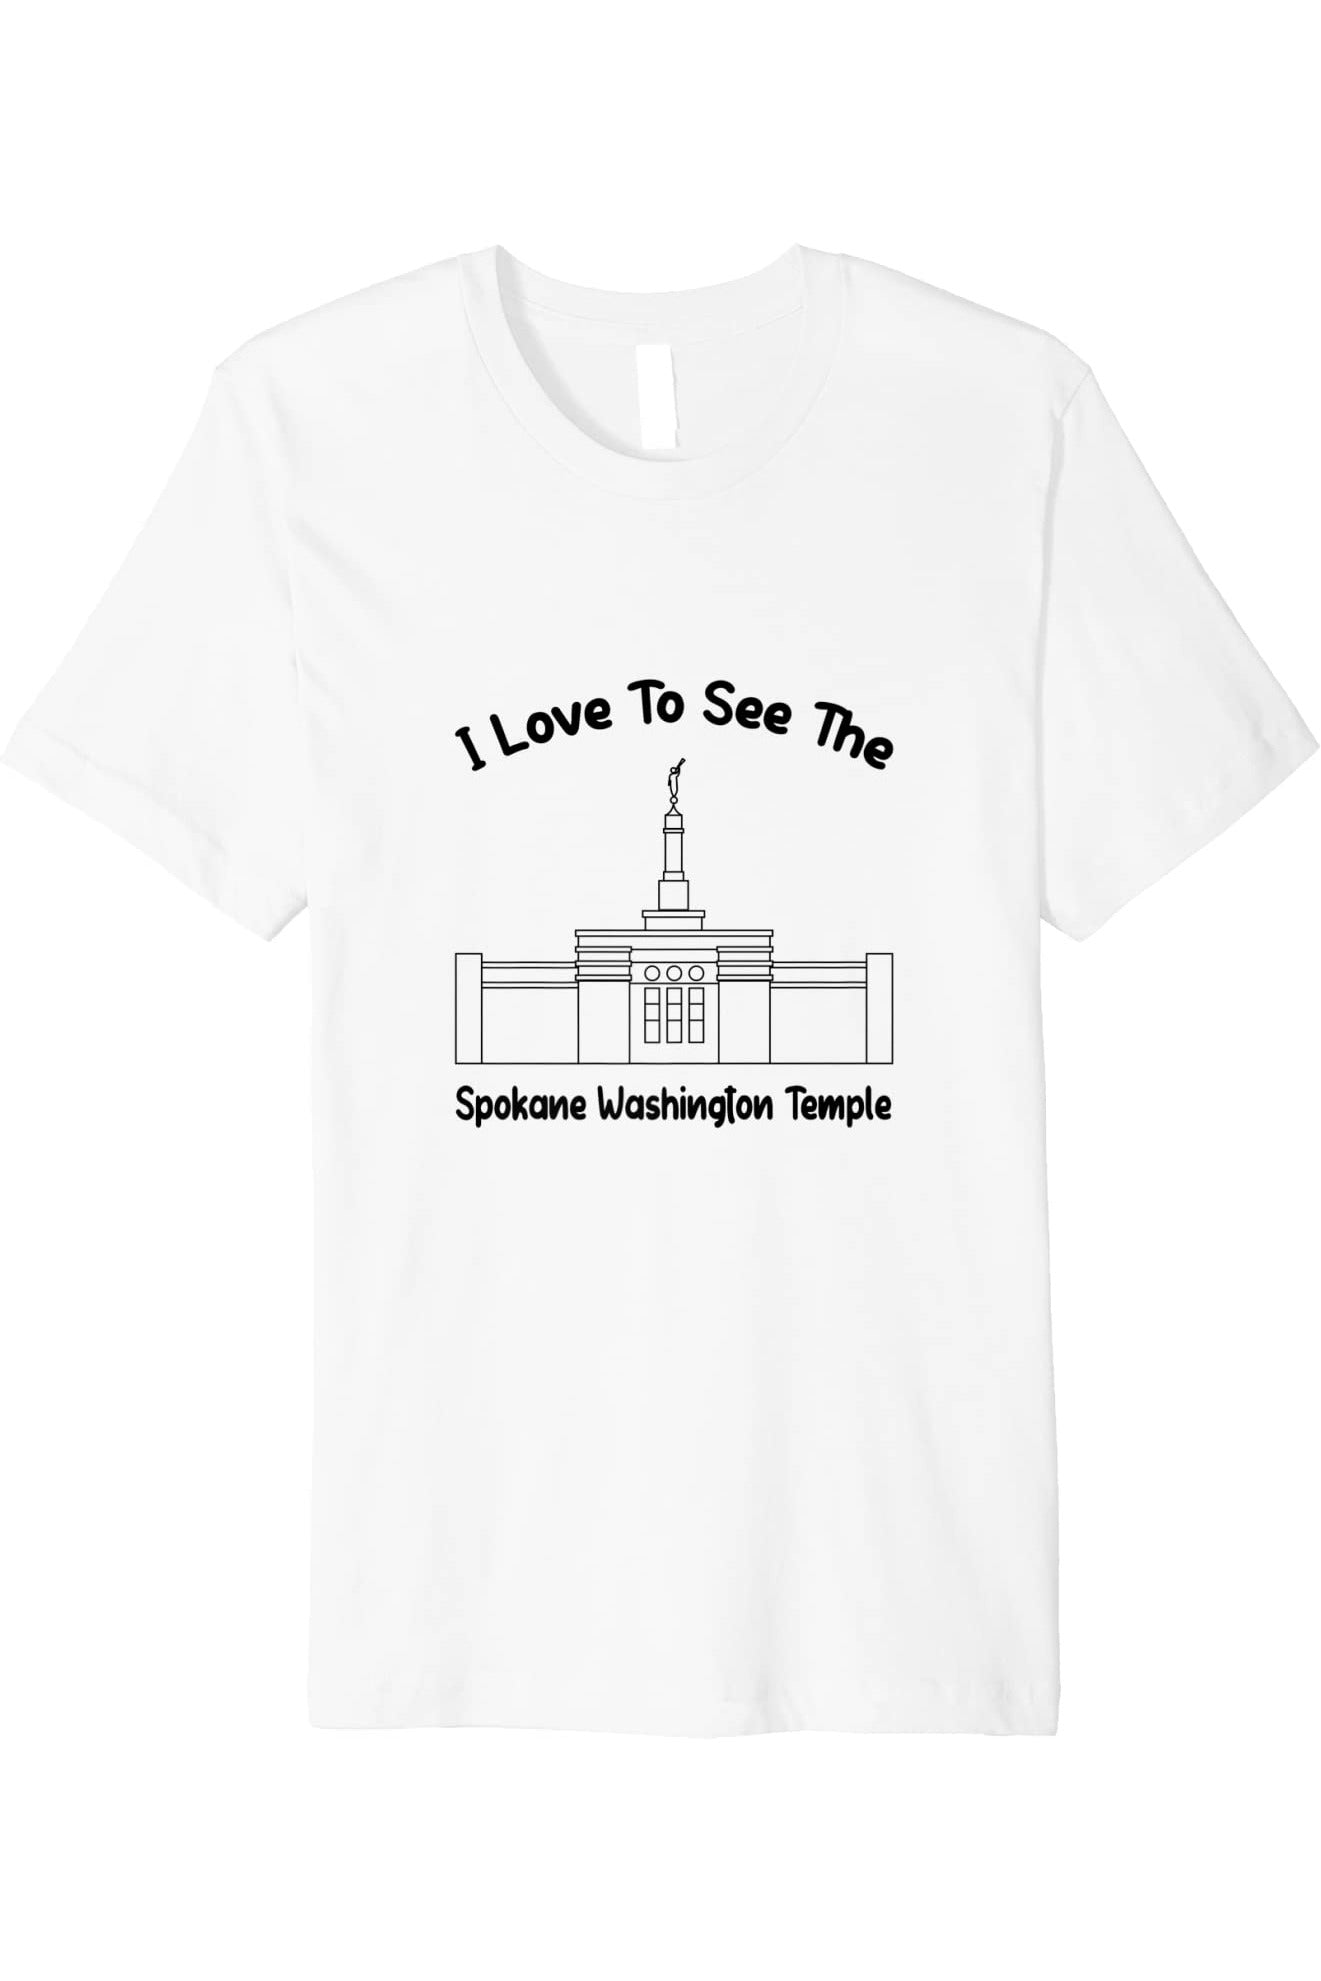 Spokane Washington Temple T-Shirt - Premium - Primary Style (English) US